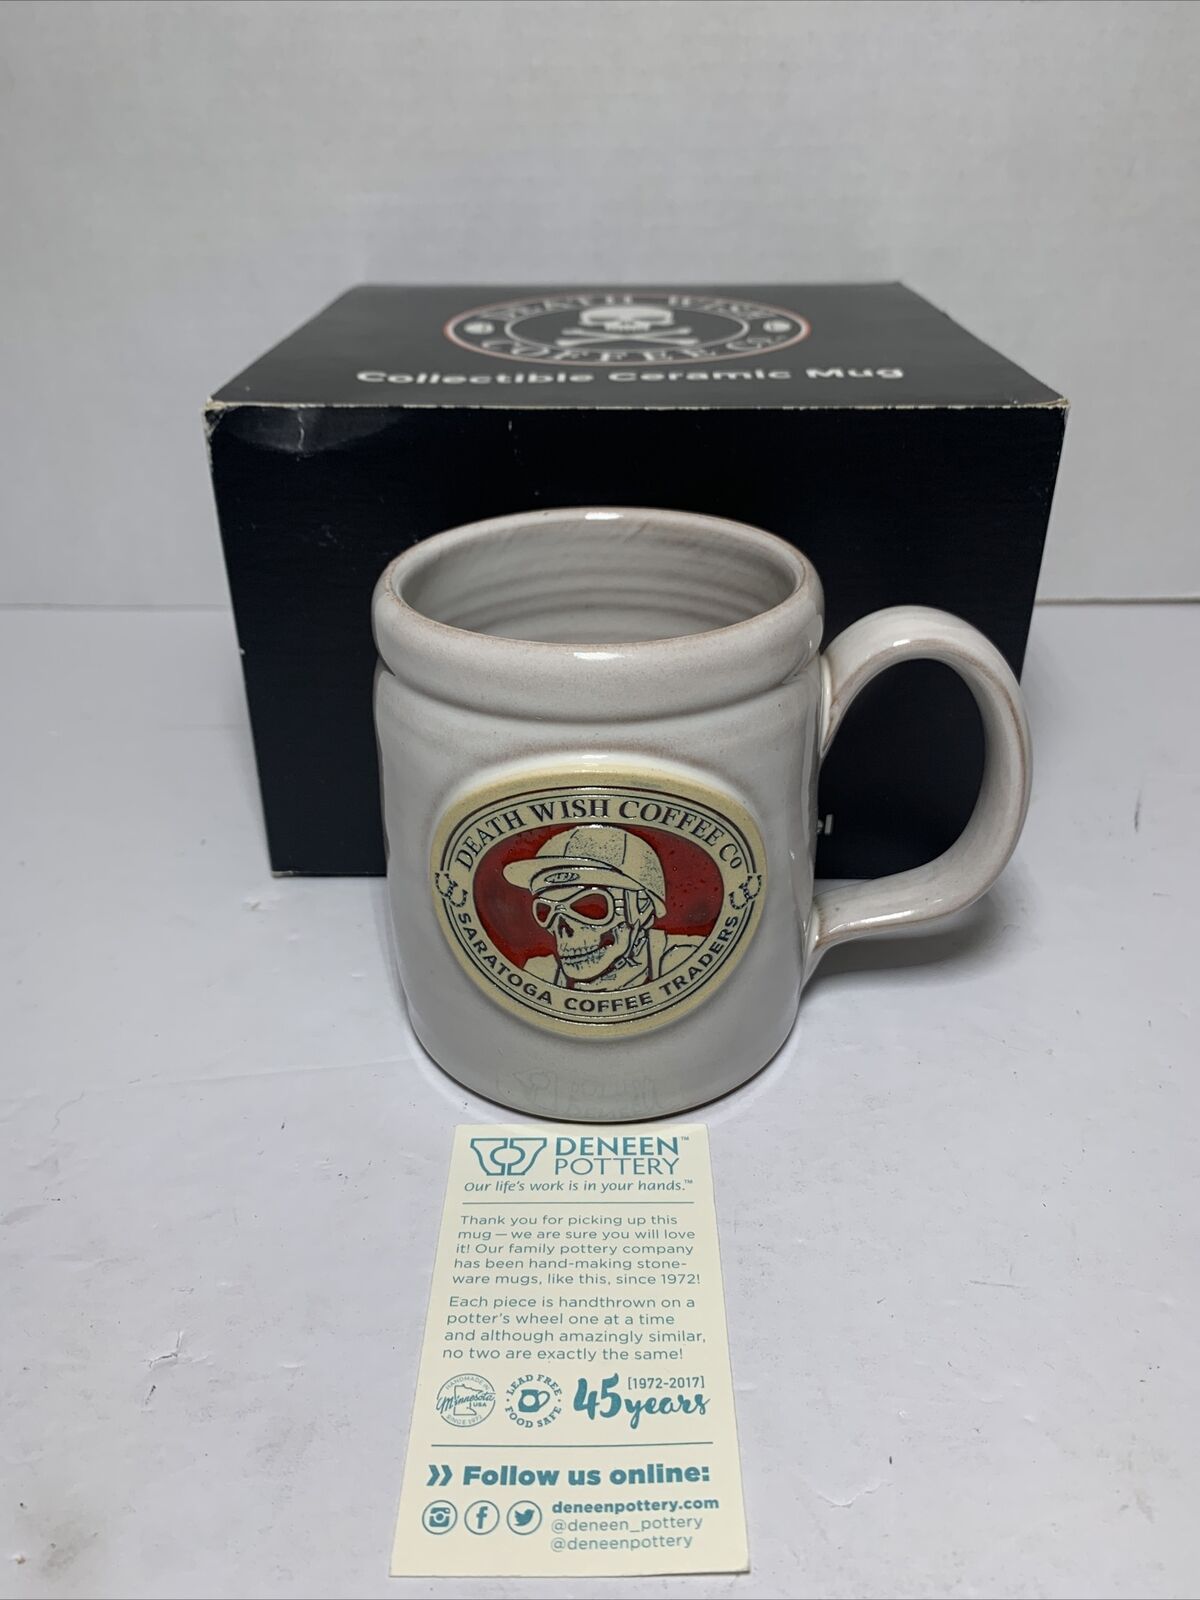 Death Wish Coffee Company Saratoga Coffee Traders 2017 Mug #1006/1200